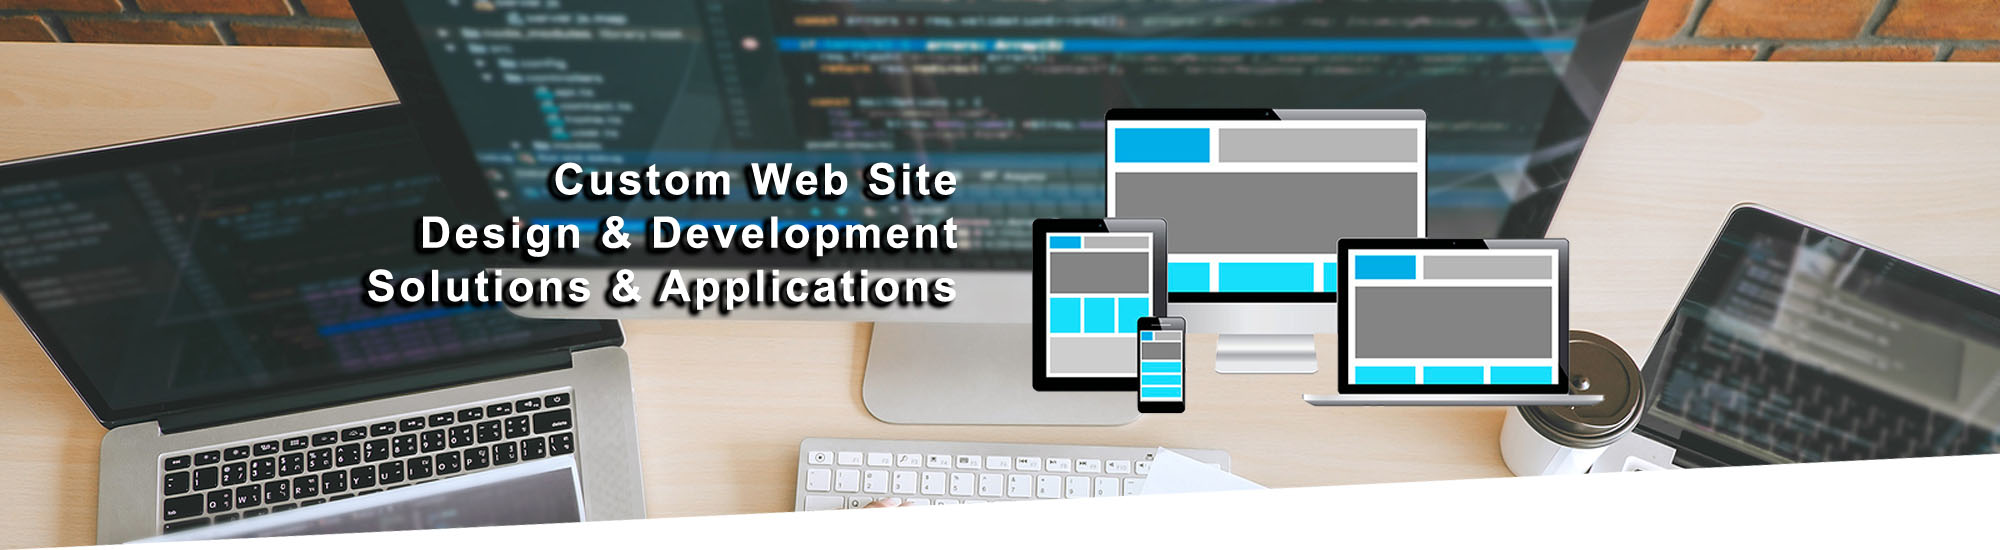 Custom Web Site Design & Development, Solutions & Applications